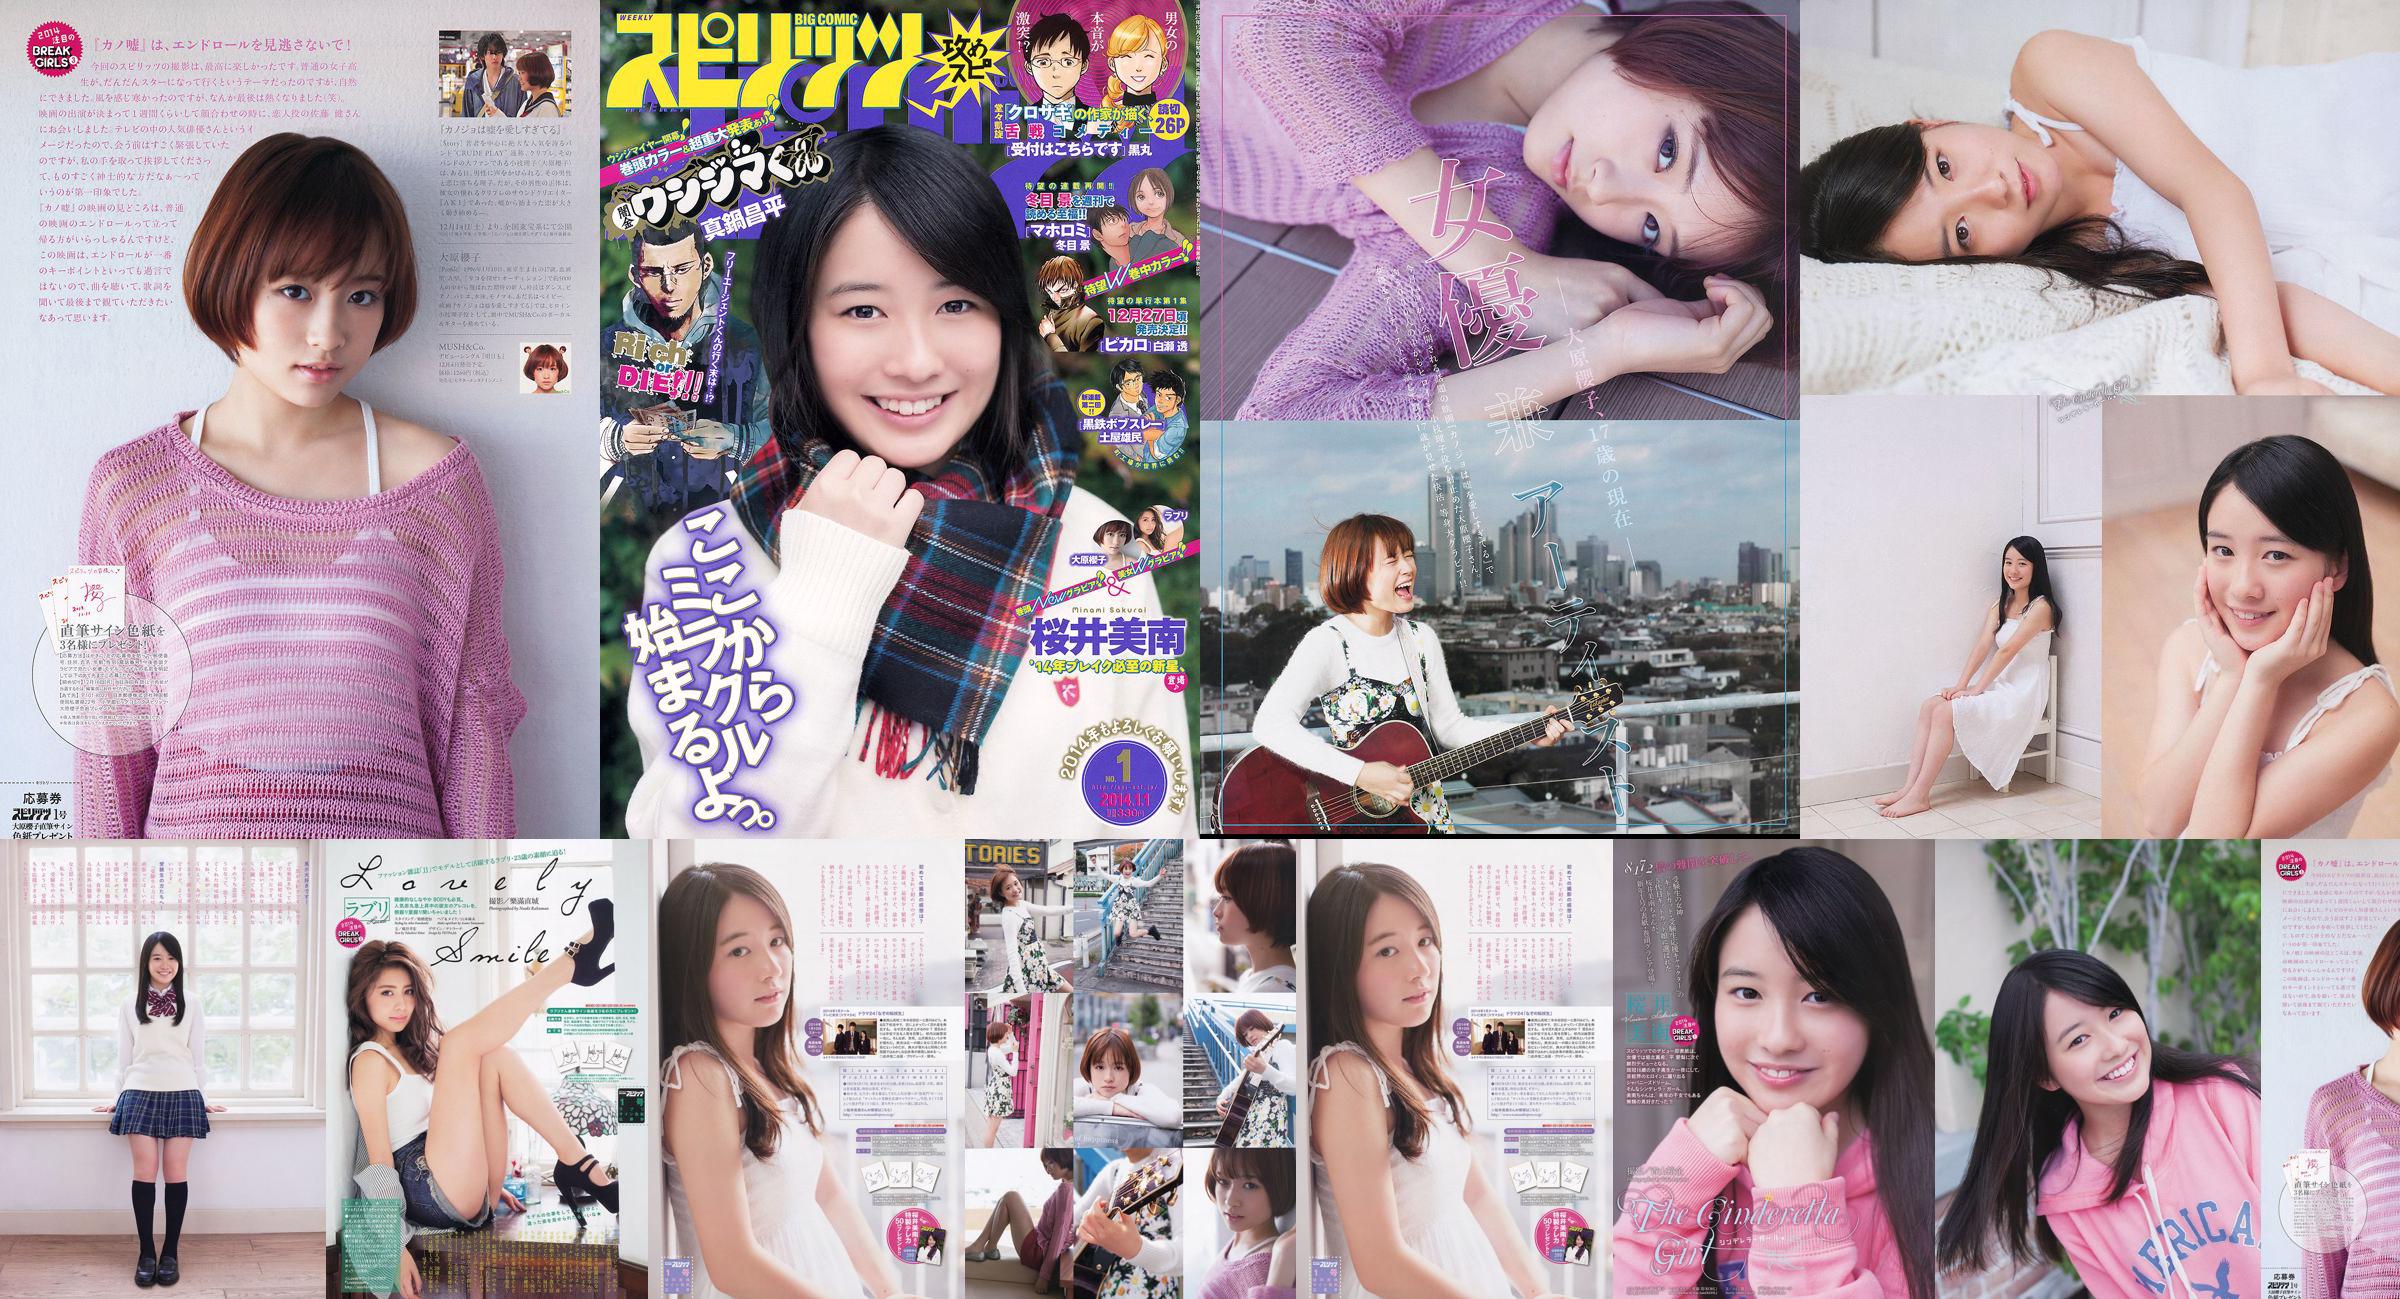 [Grands esprits de la bande dessinée hebdomadaire] Sakurai Minan Ohara Sakurako 2014 Magazine photo n ° 01 No.c7550a Page 1